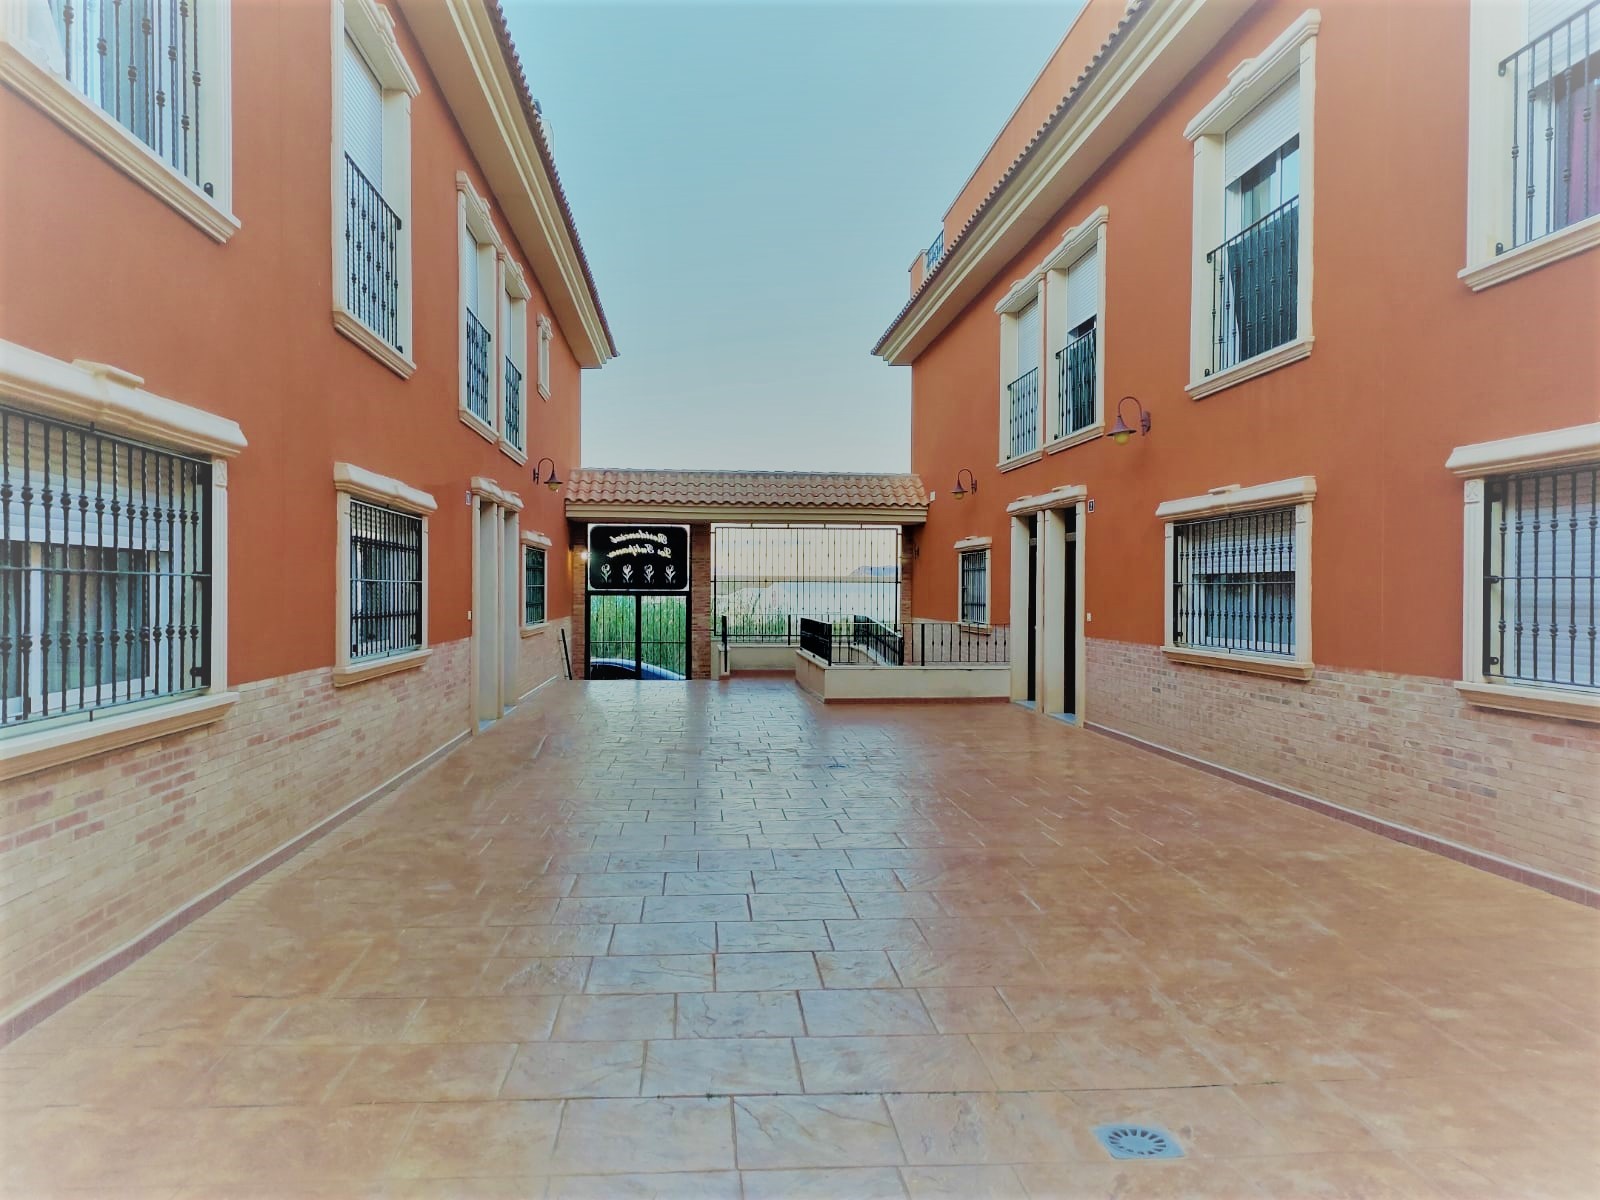 Townhouse in Aspe central in Alicante Property